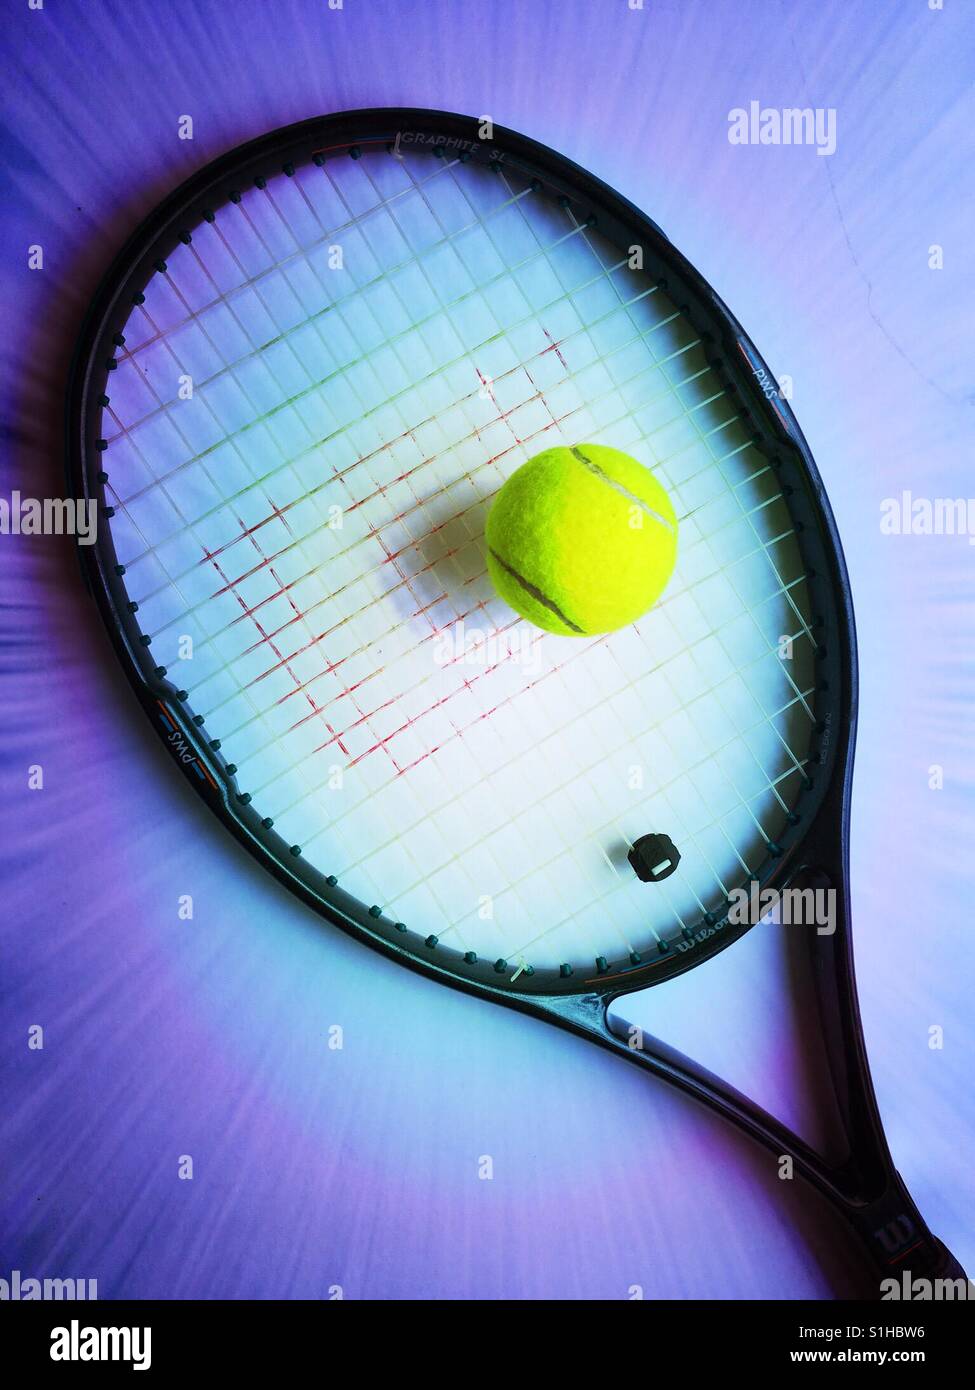 Graphite tennis racket and tennis ball Stock Photo